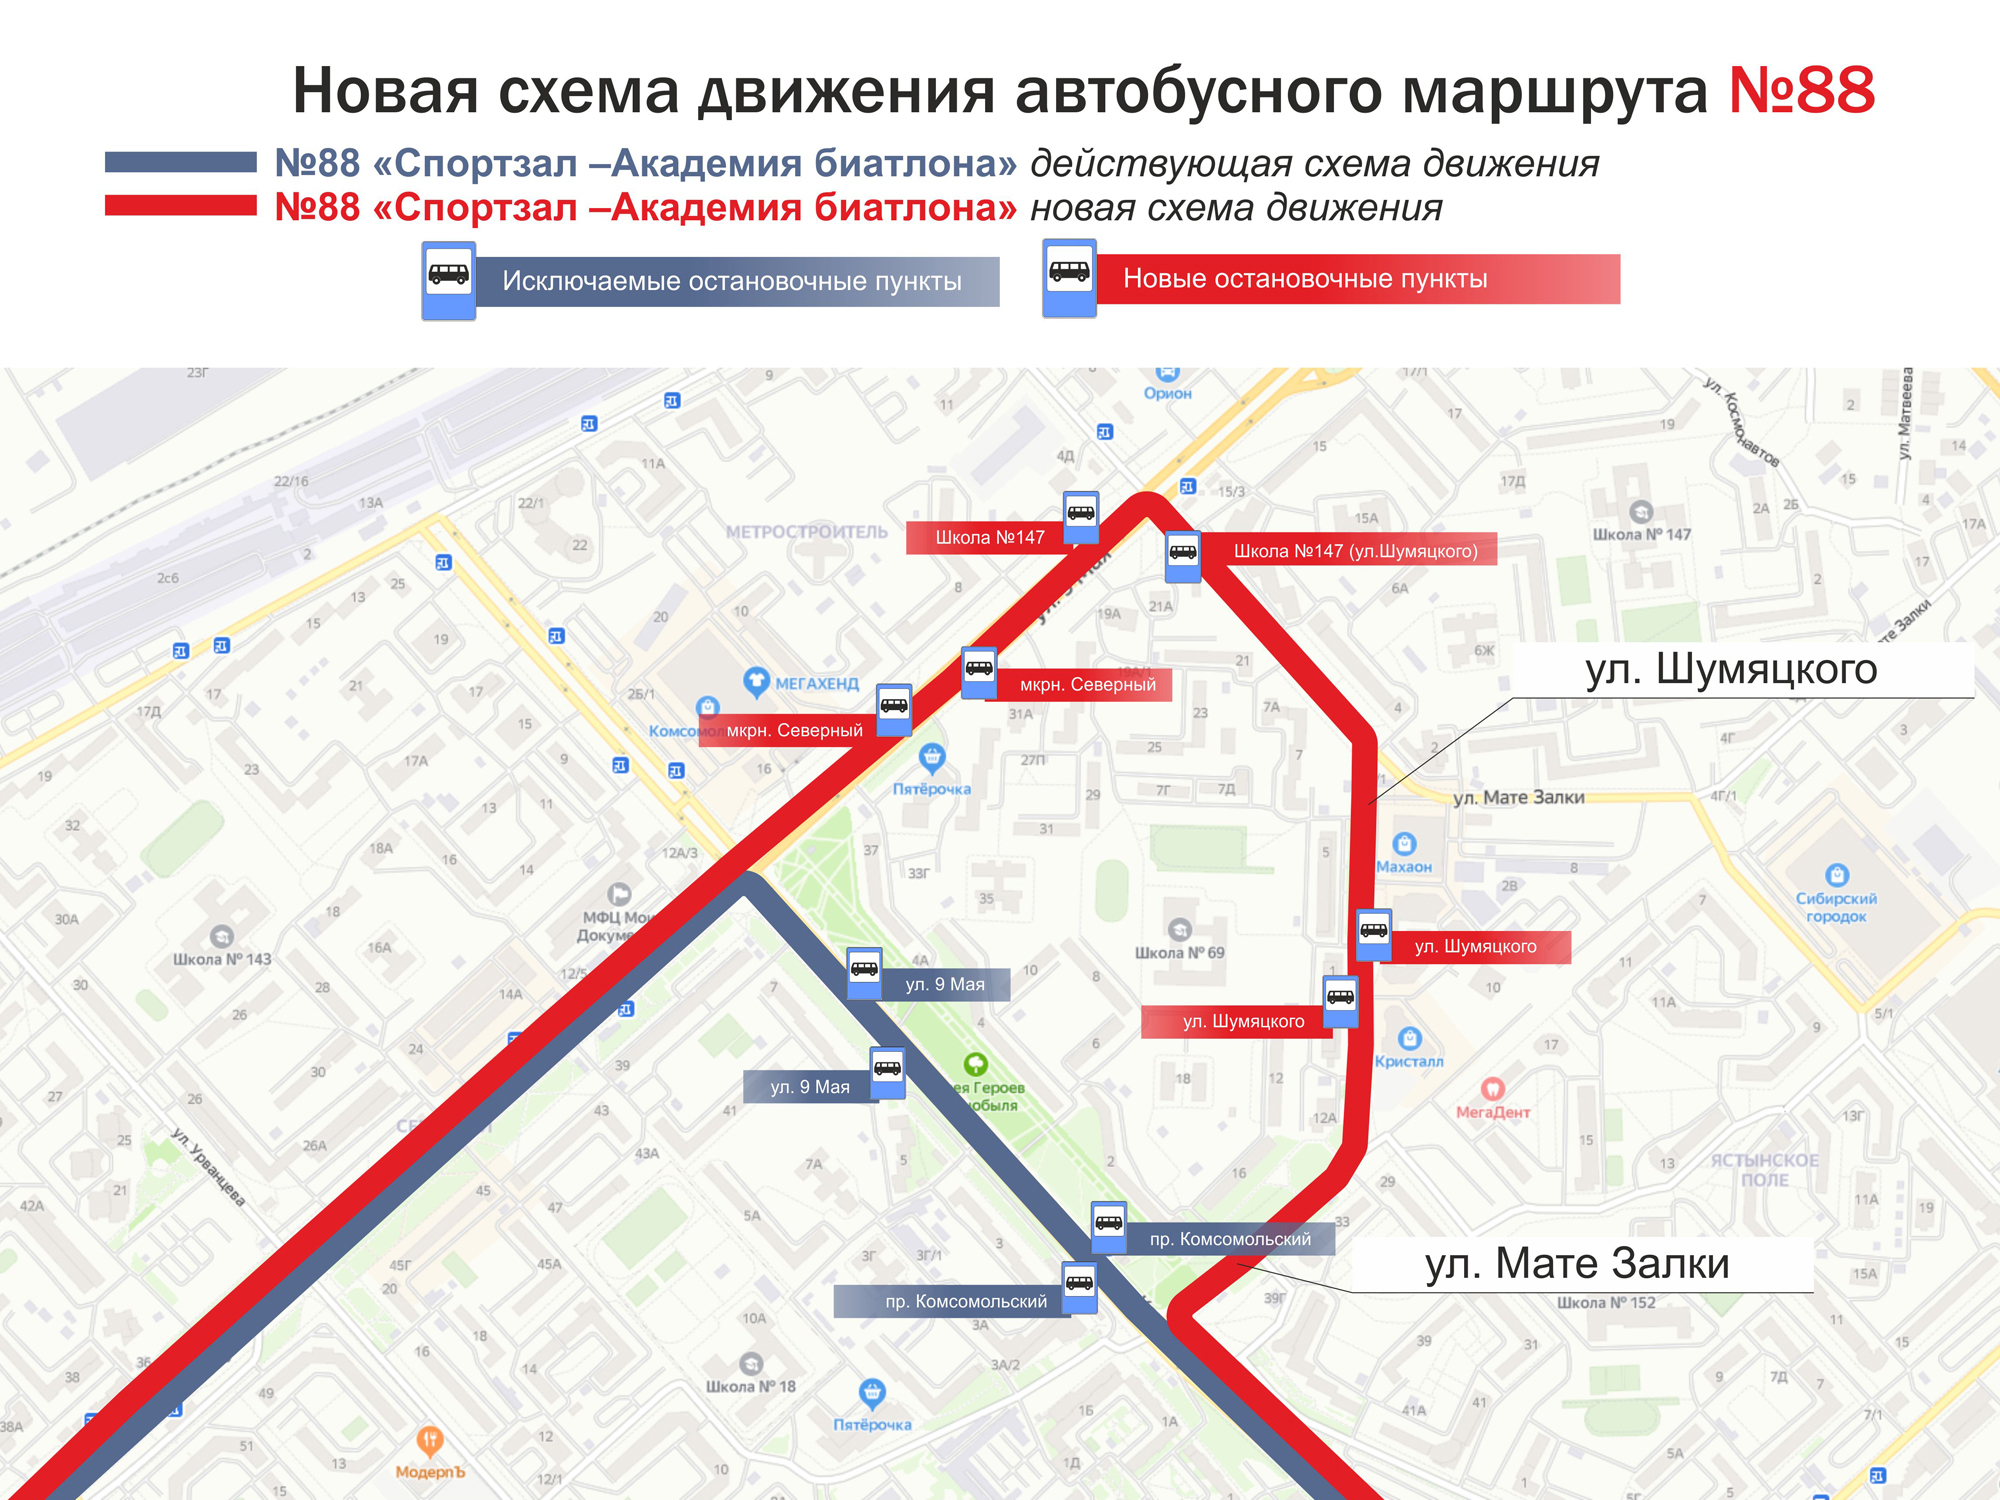 Как добраться красноярск на автобусе. Автобусные маршруты. Схема маршрута. Маршрутка 88. Схема движения автобусов в Красноярске.